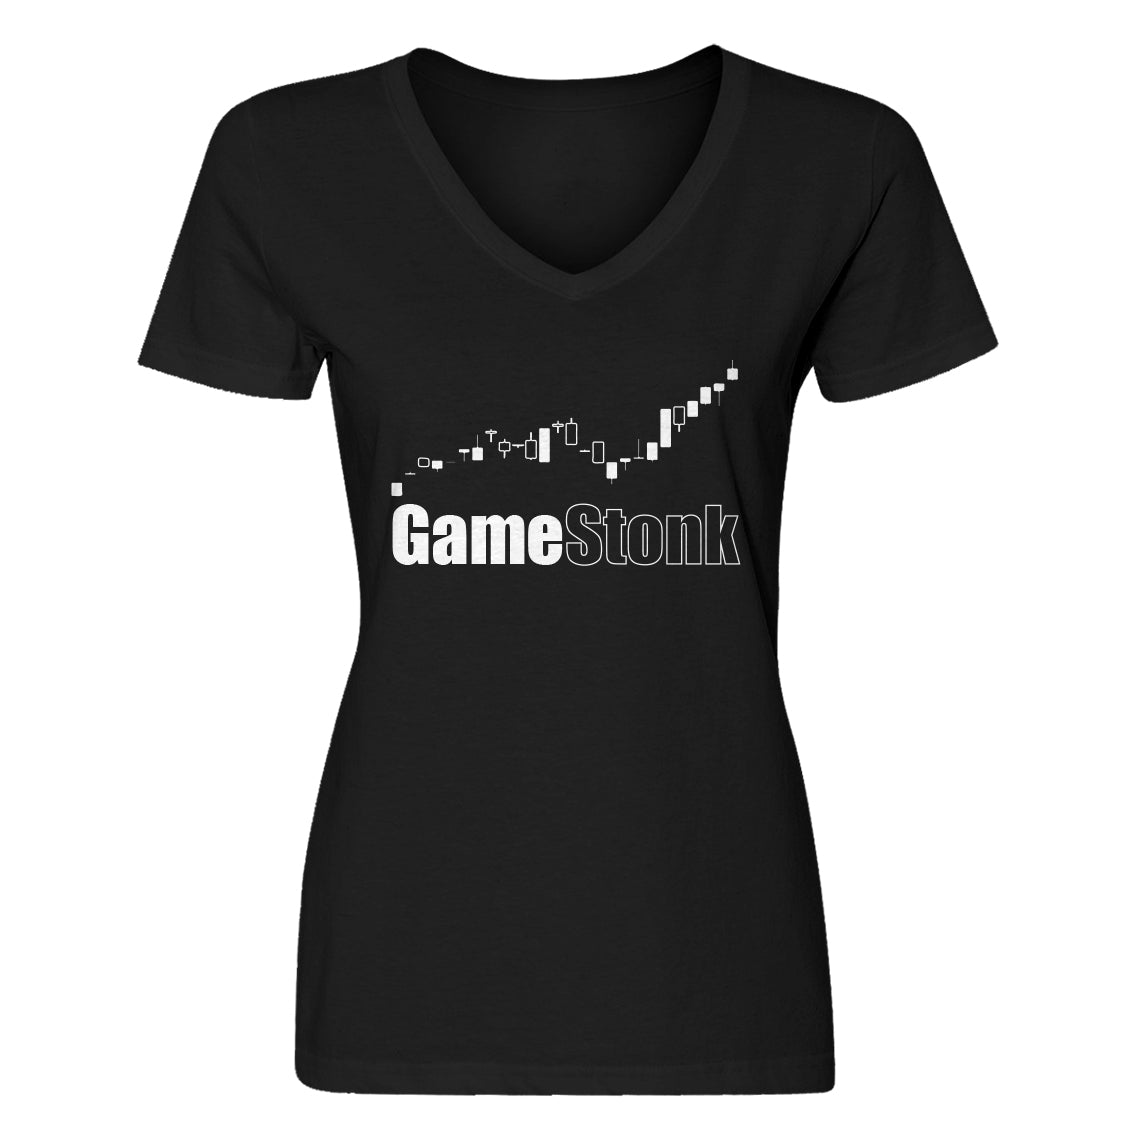 Womens GameStonk V-Neck T-shirt